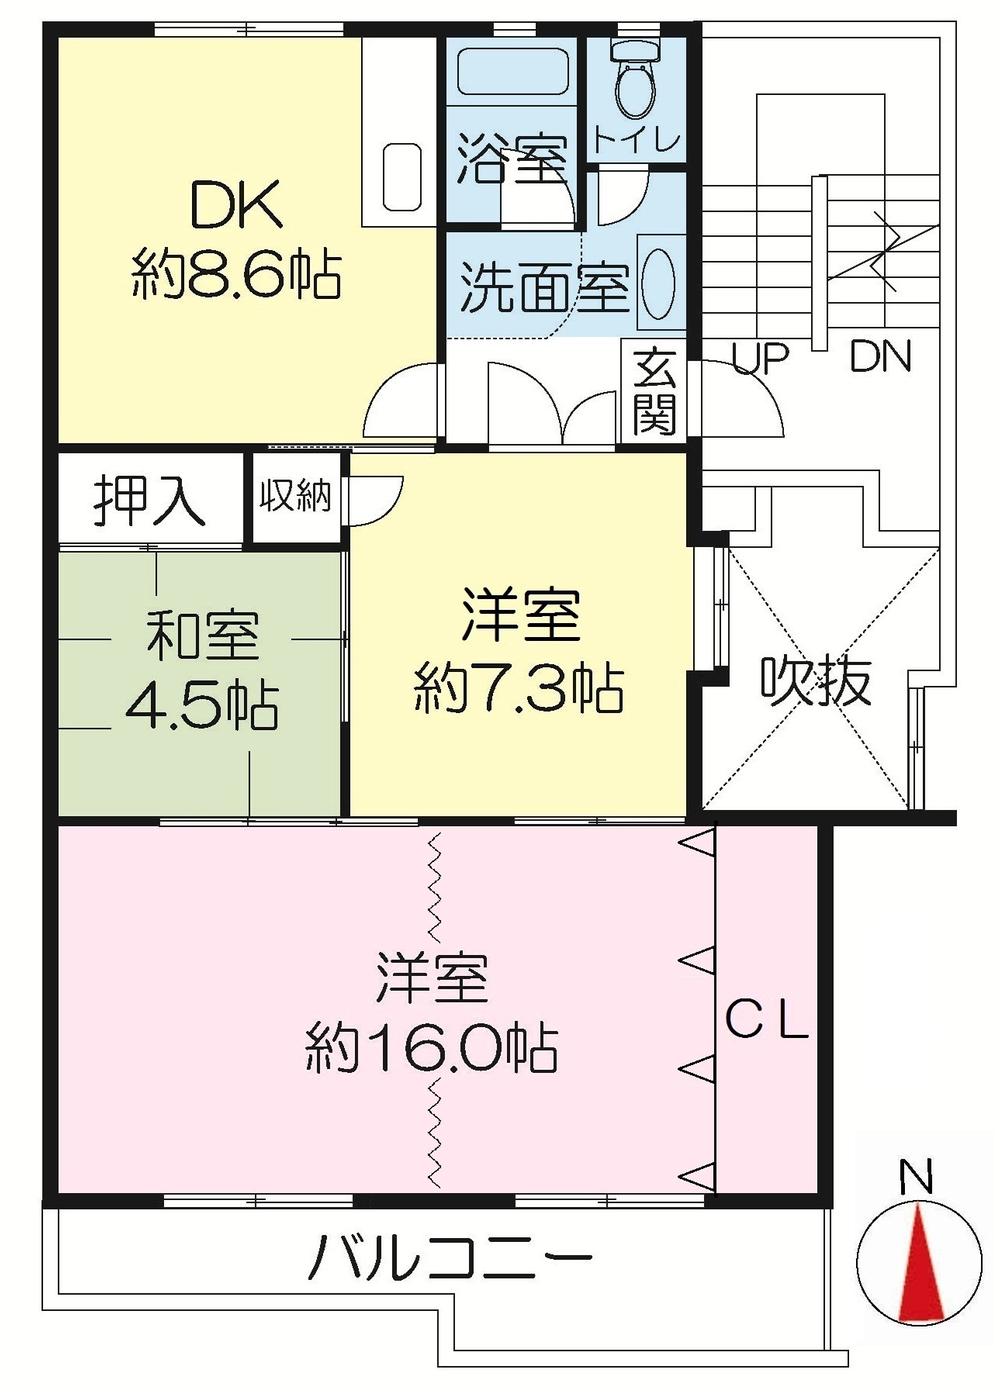 Floor plan. 3DK, Price 13.8 million yen, Occupied area 70.92 sq m , Balcony area 9 sq m